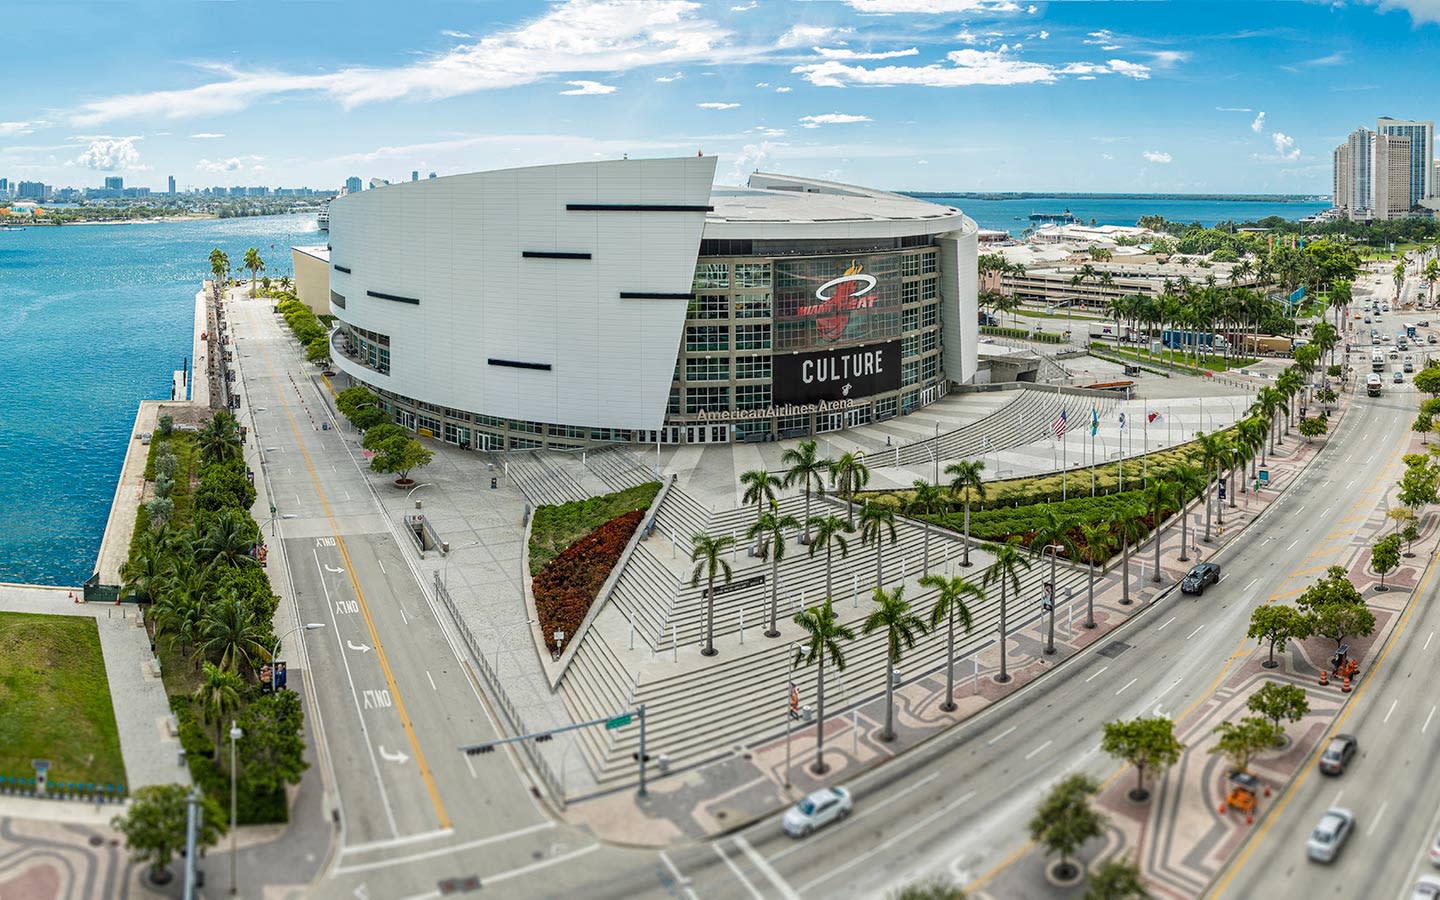 American Airlines Arena Miami